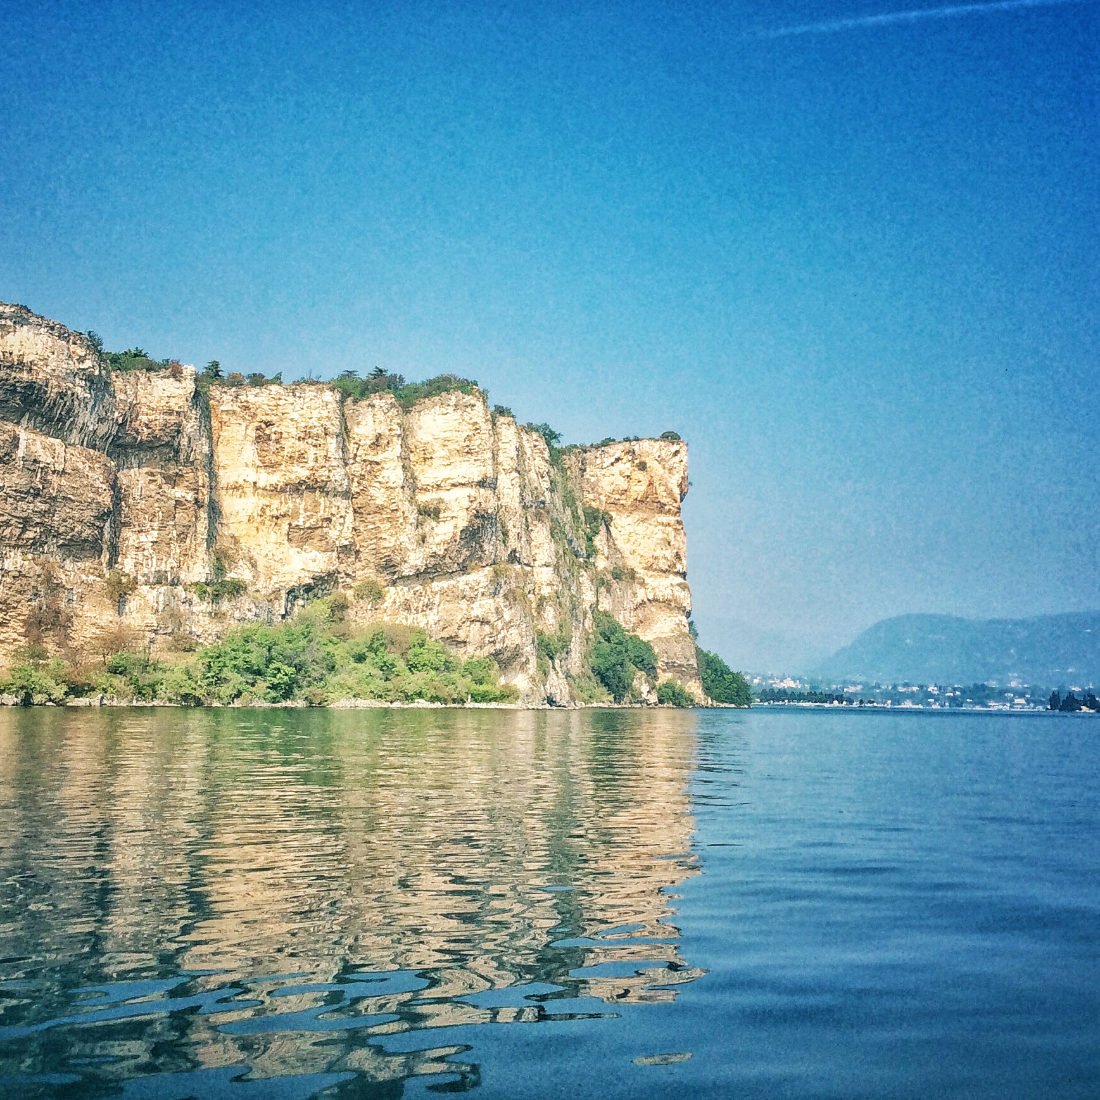 Isola del Garda: Tour of Lake Garda by boat